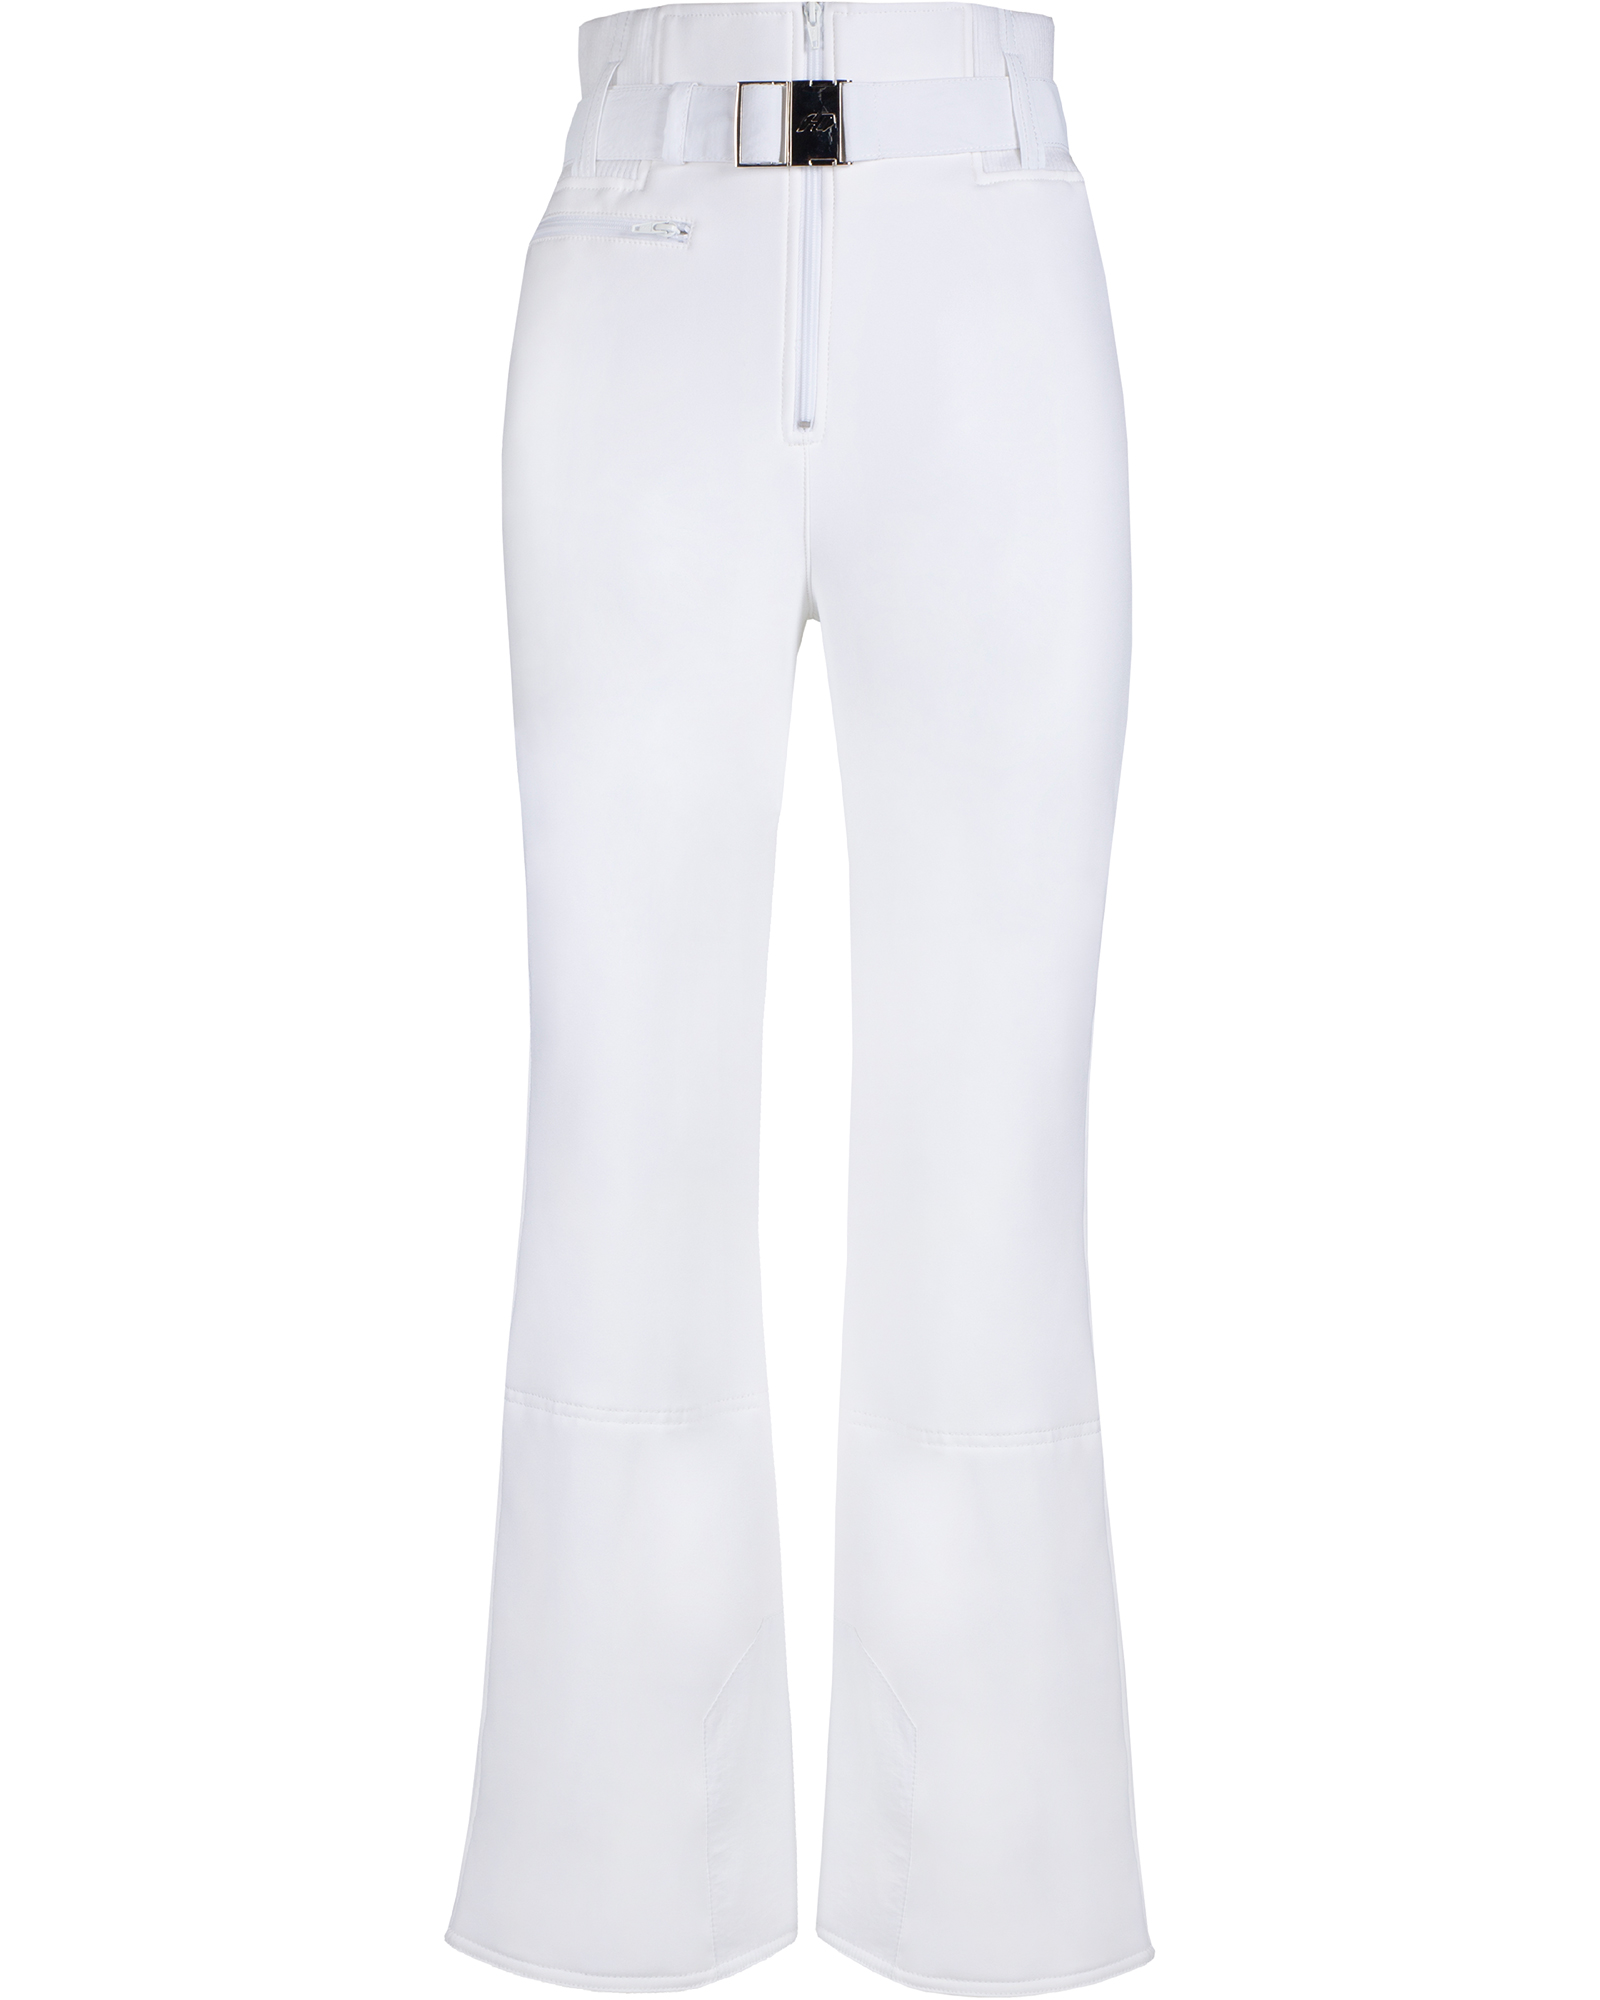 Duvillard Gridin Women’s Pants - White 8